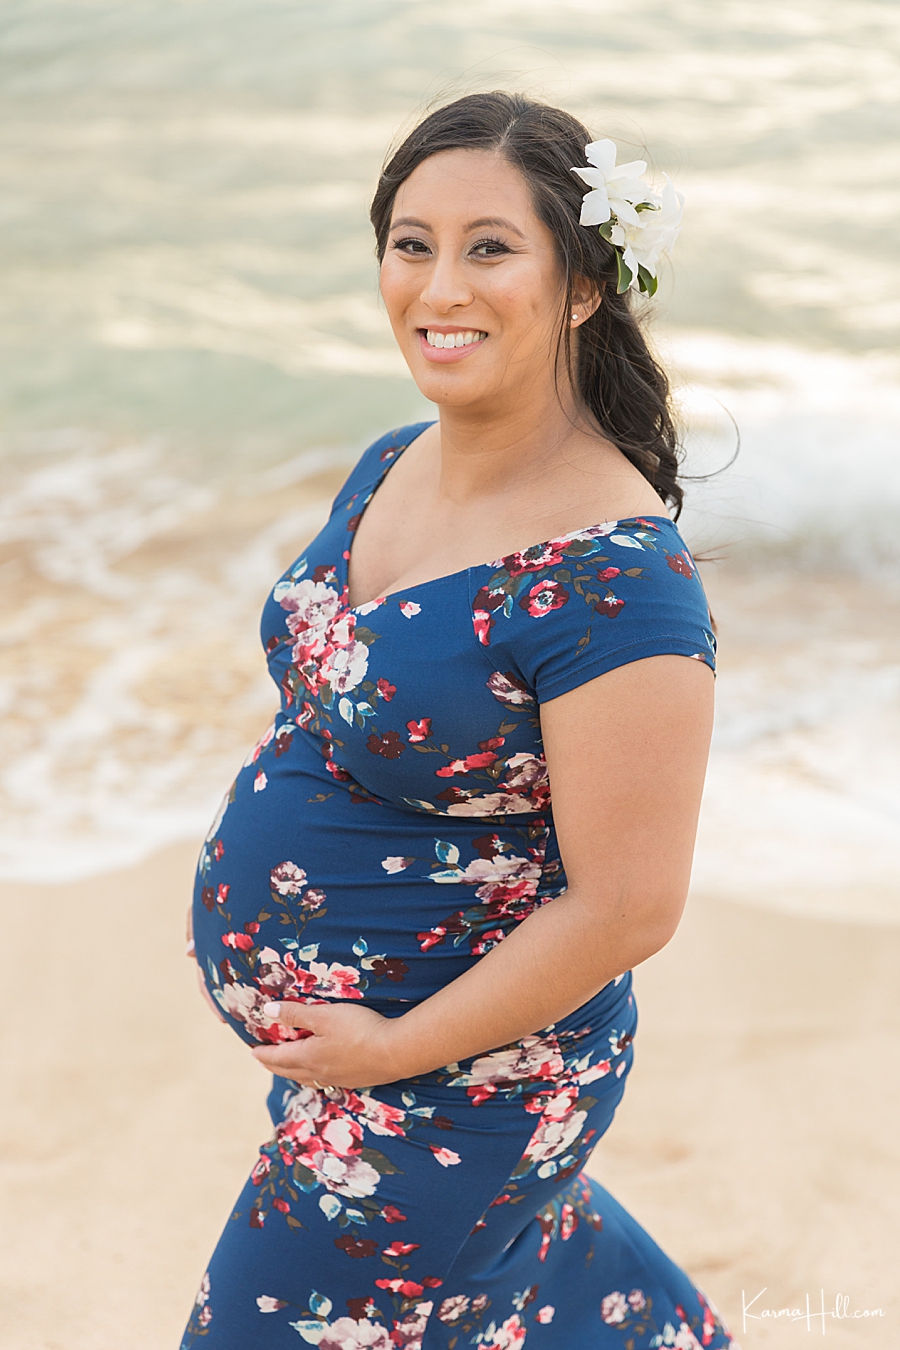 Maternity portraits in Maui, Hawaii
